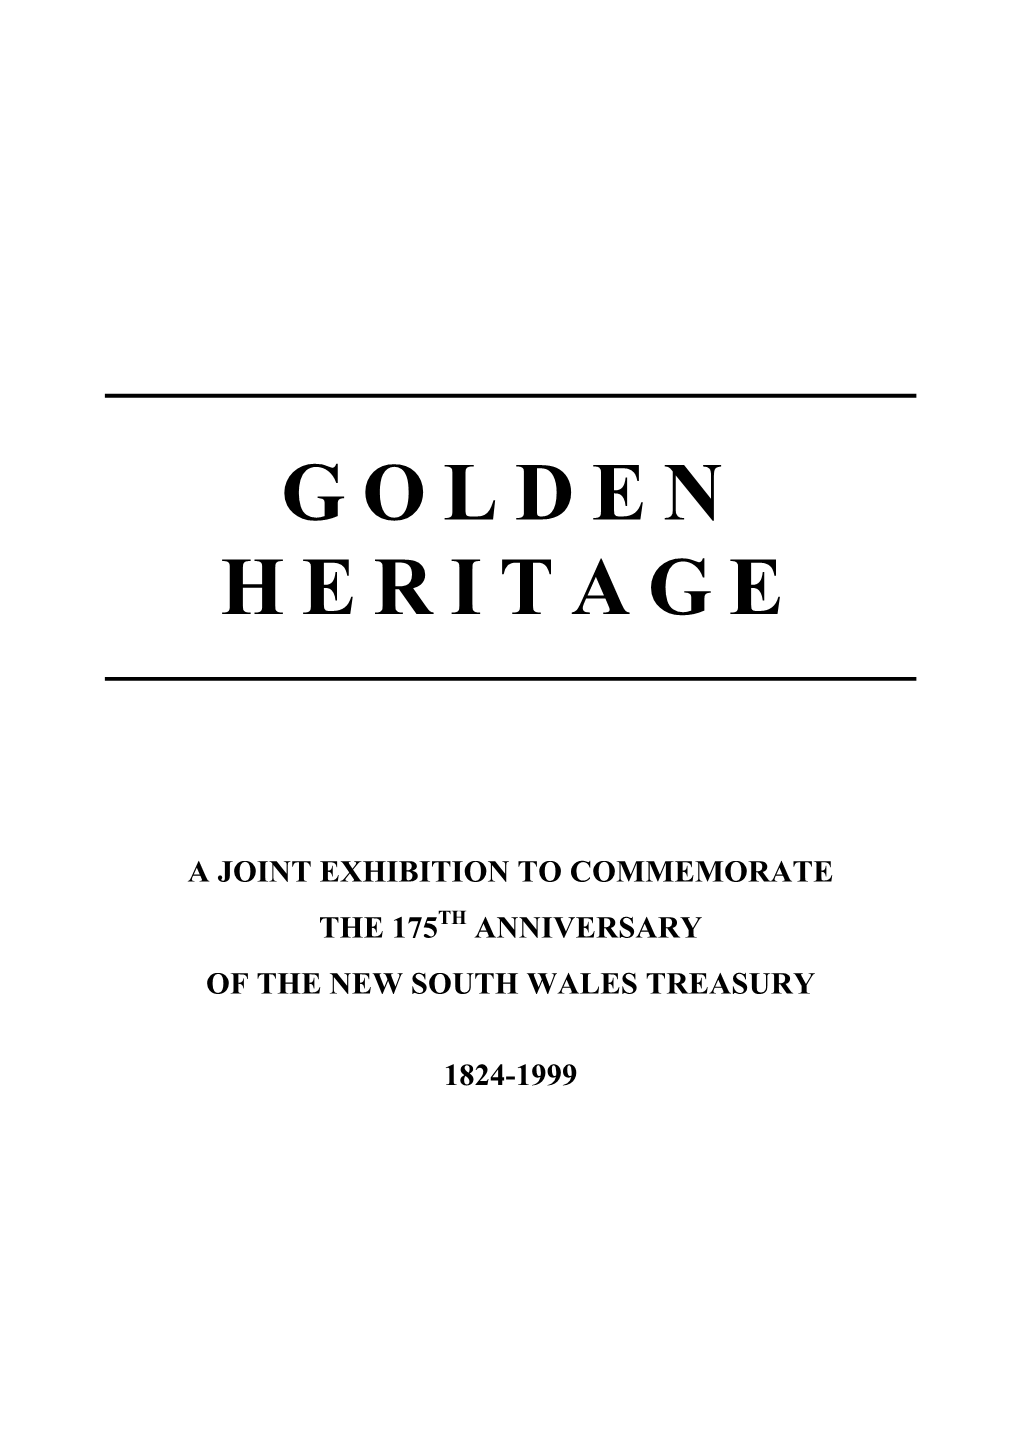 The Golden History of NSW Treasury